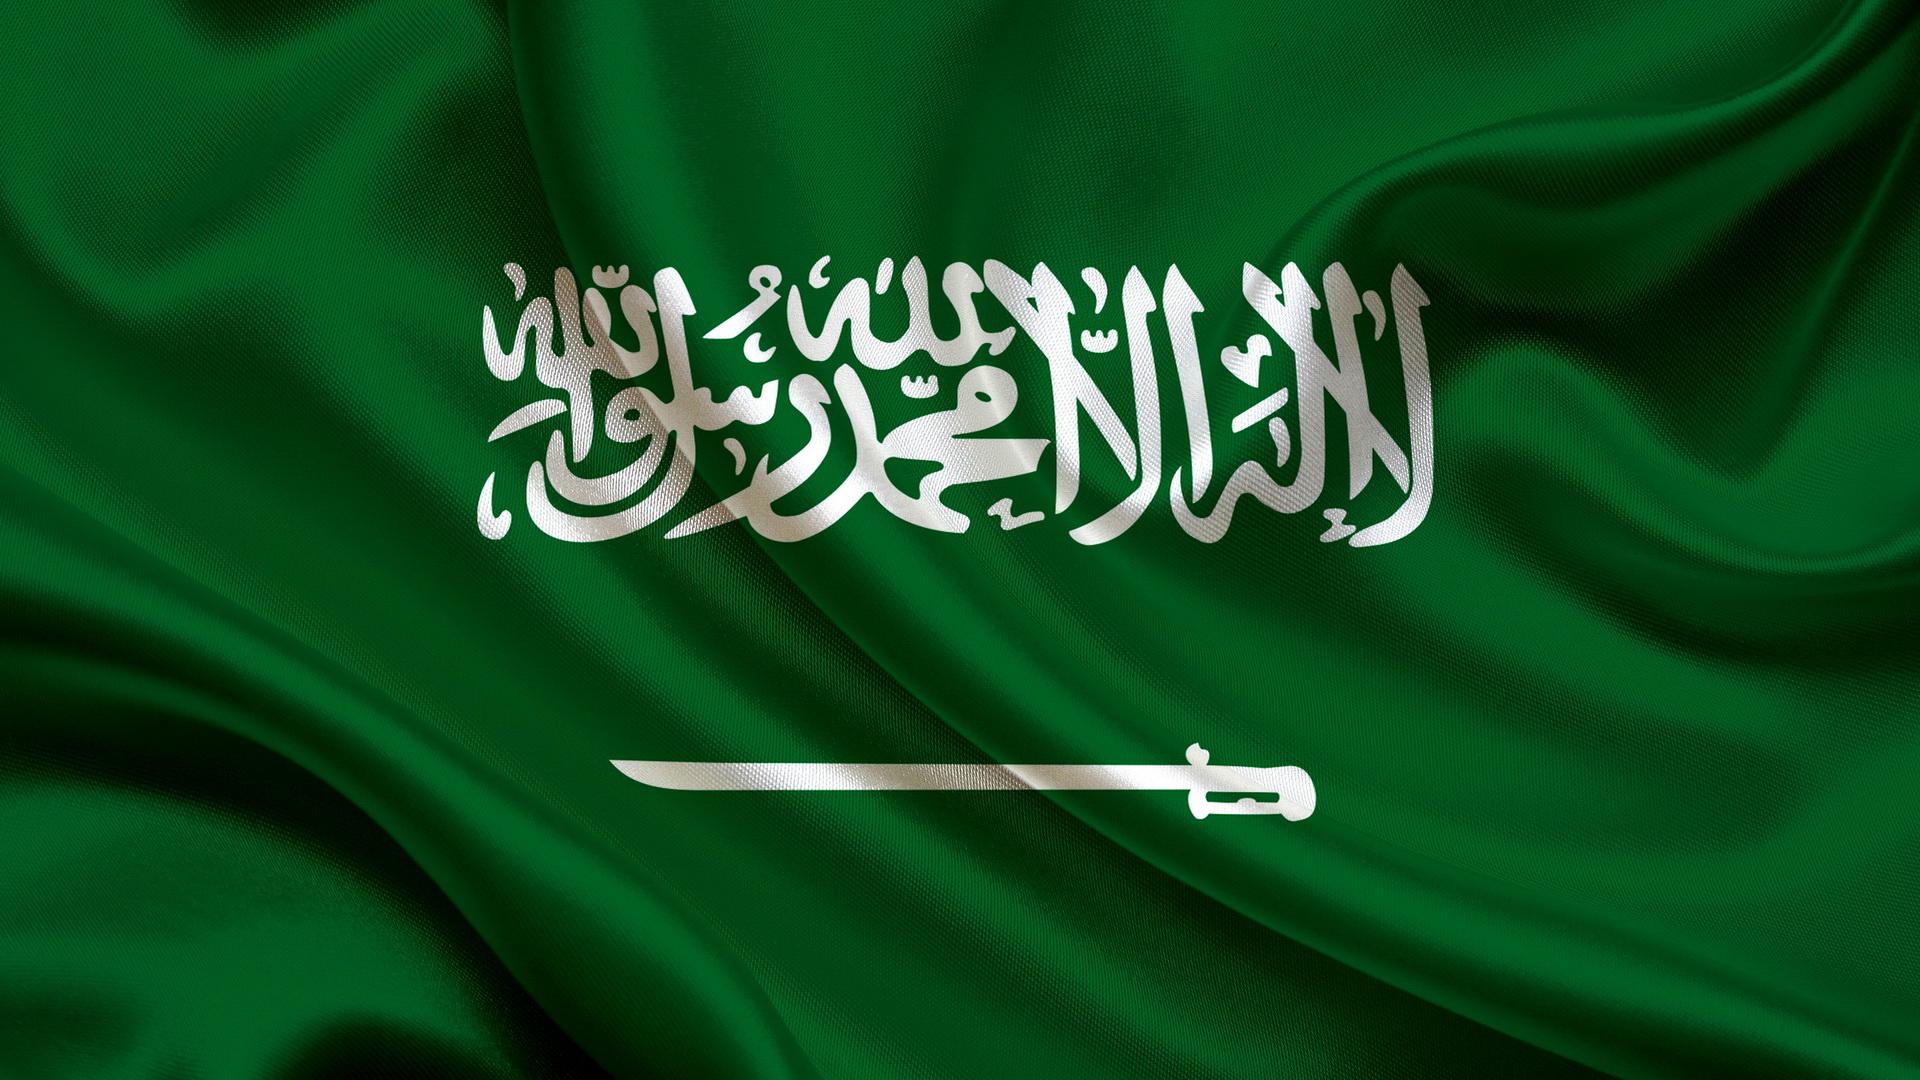 5D2948F9B85D01Afad9A666Bddb40095 صور علم السعودية - خلفيات واتس لعلم السعودية عايشه عمري